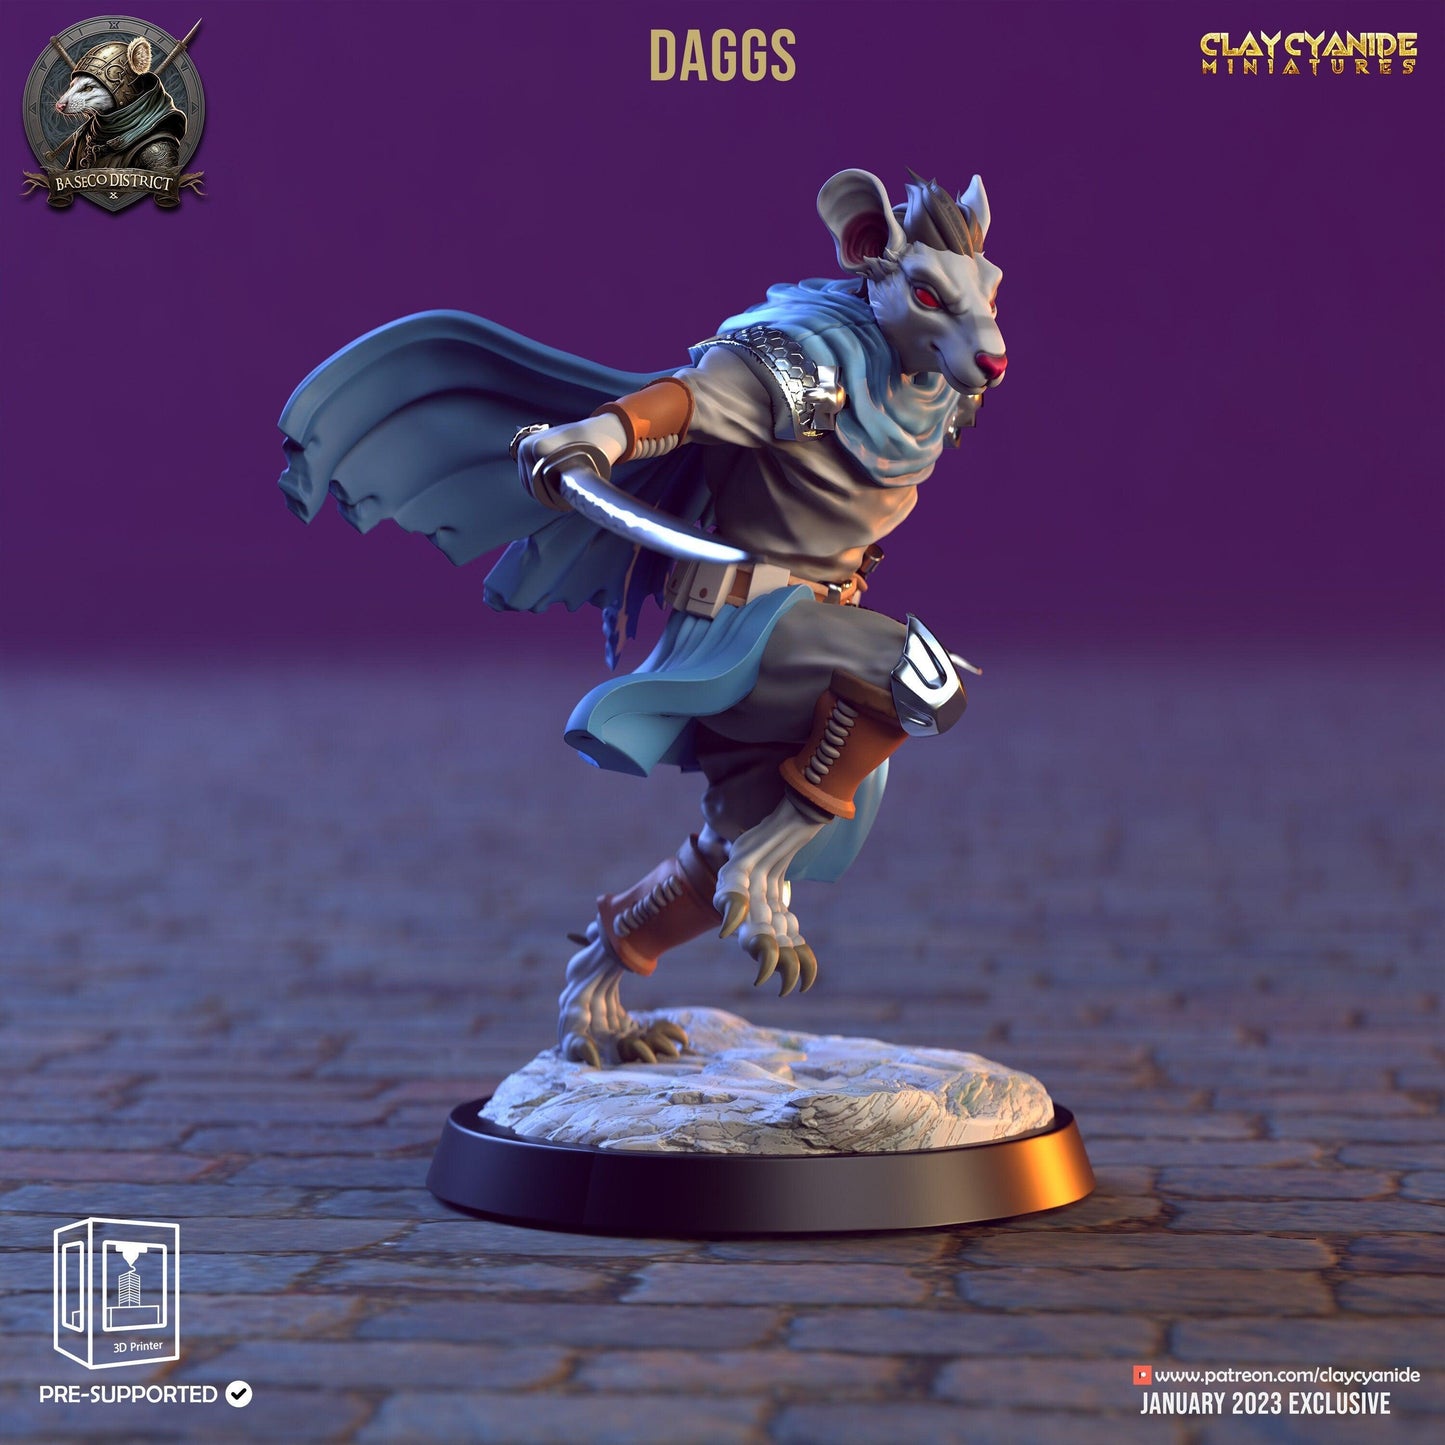 Daggs Burat Knight Ratmen miniature | Clay Cyanide | Baseco District | DnD Miniature | Dungeons and Dragons, DnD 5e skaven mini - Plague Miniatures shop for DnD Miniatures